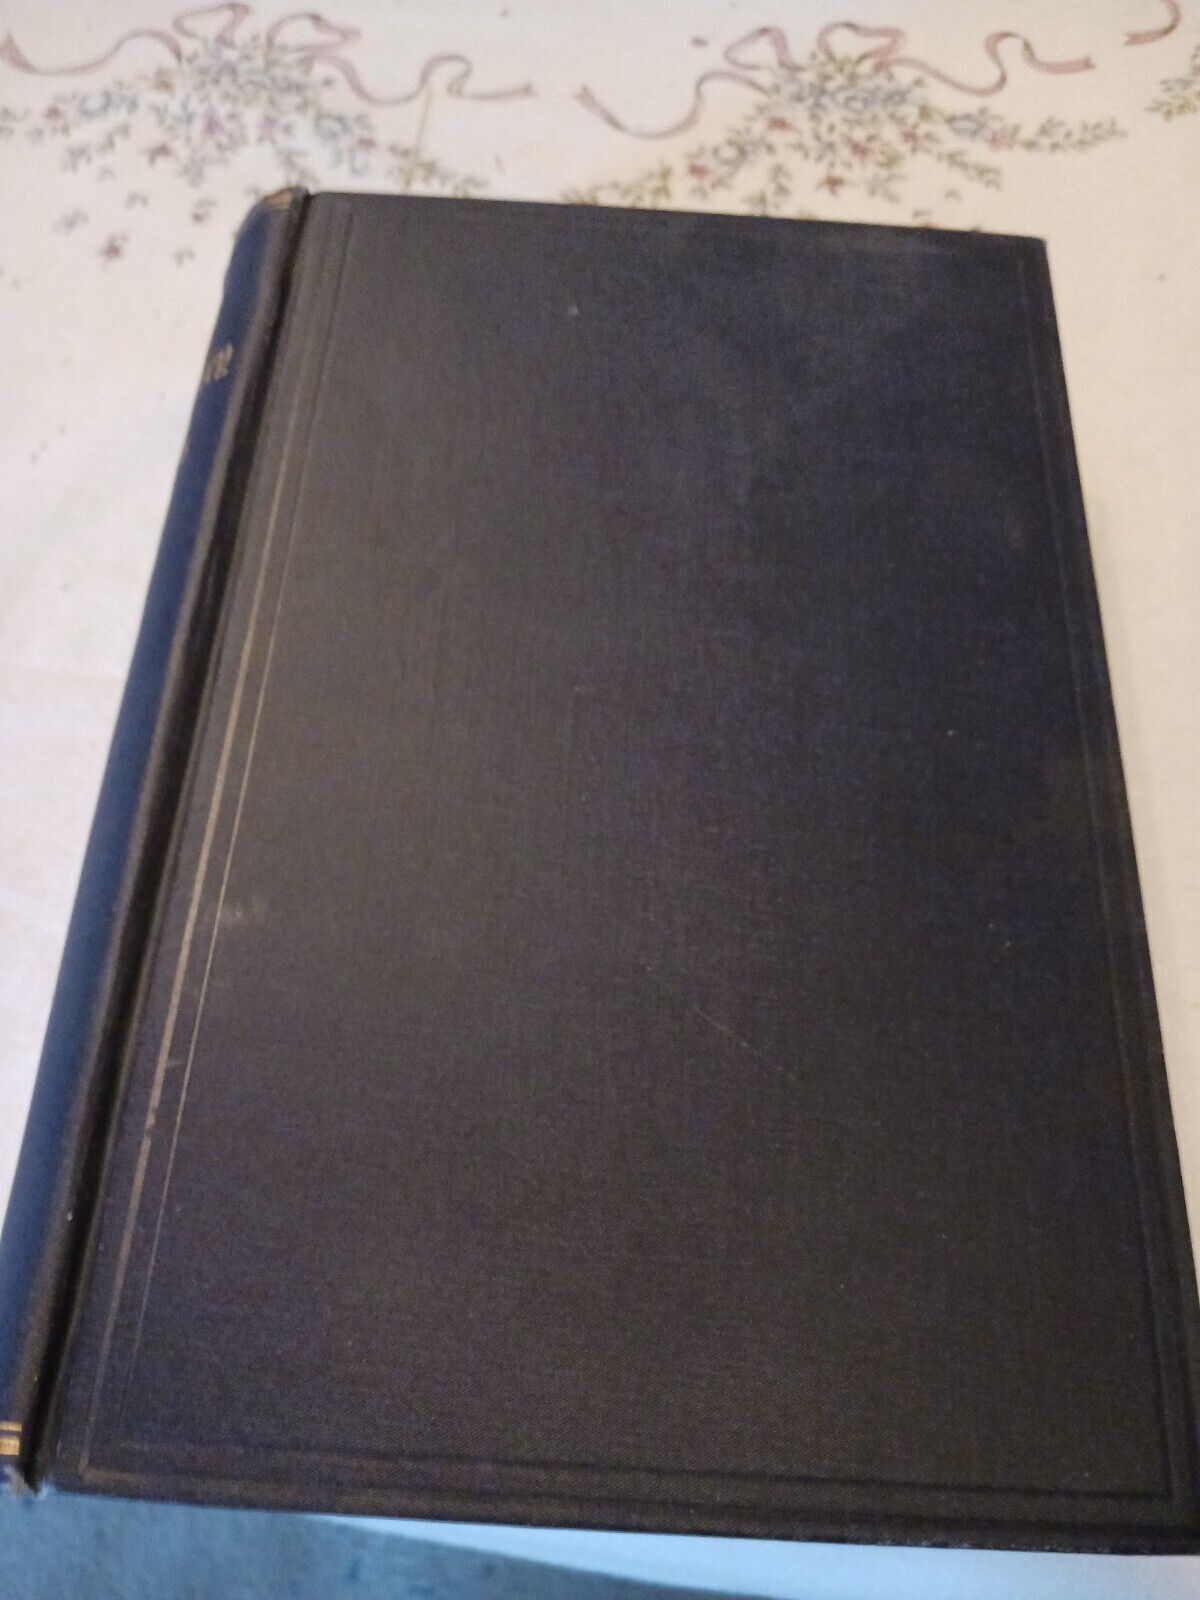 book on Danvers, MA Masonic history